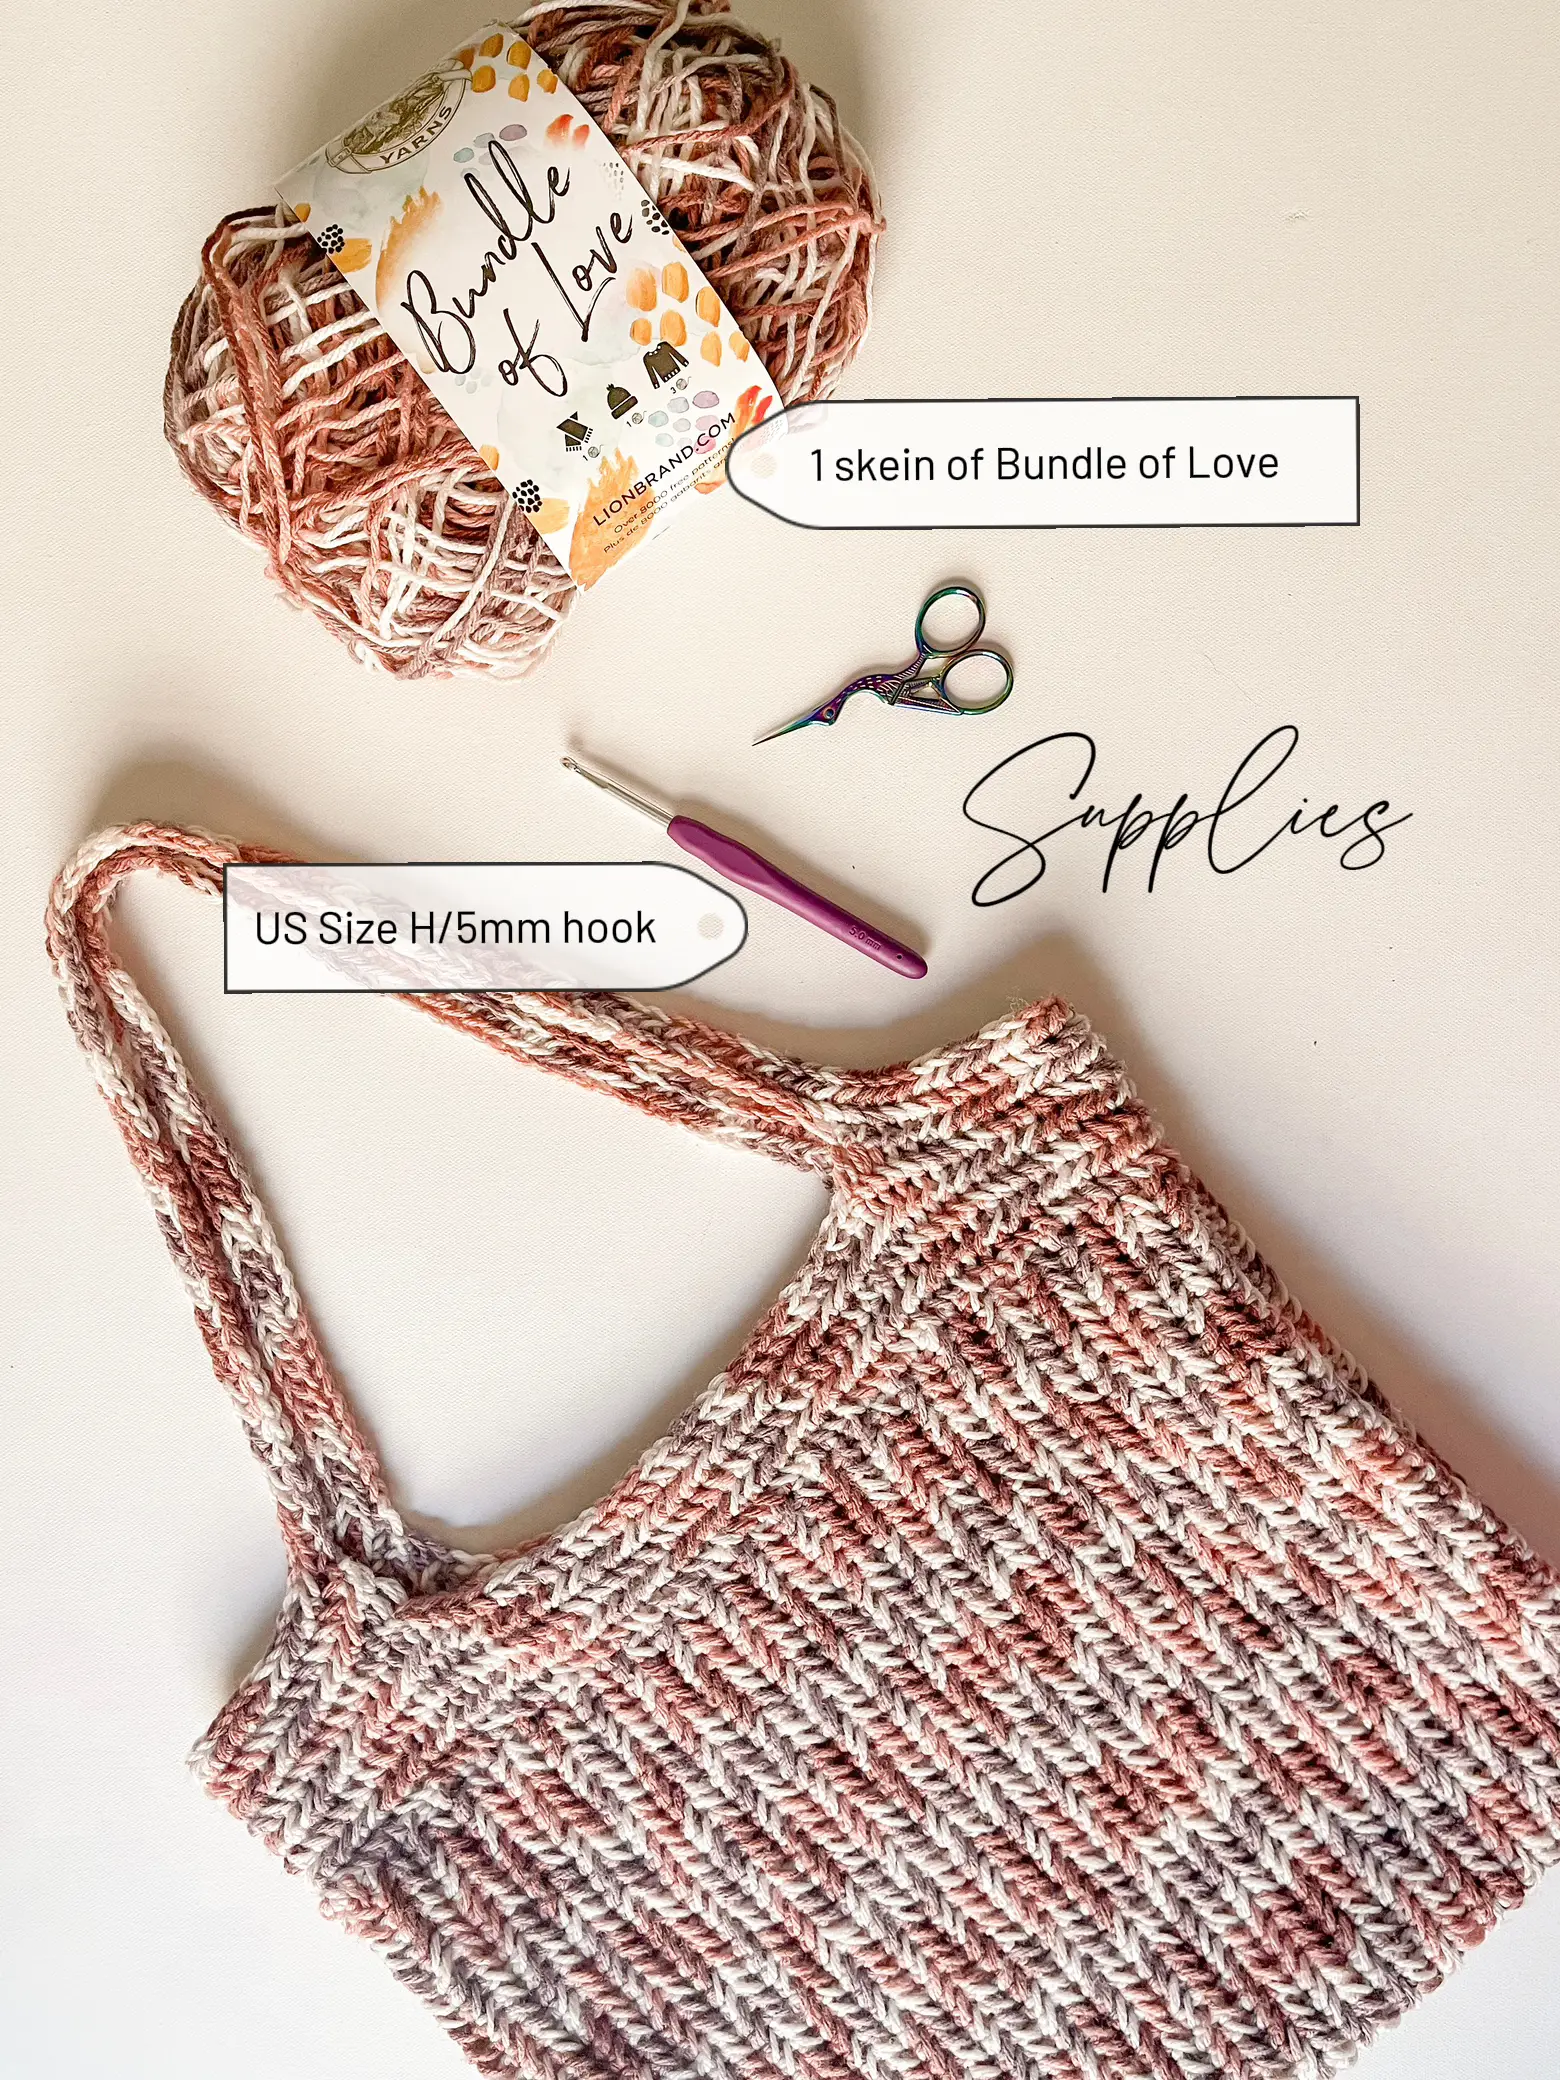 Cute little crochet bag made in 1 hour 🥰 #CrochetIdeas #CrochetersOfT, granny square tutorials